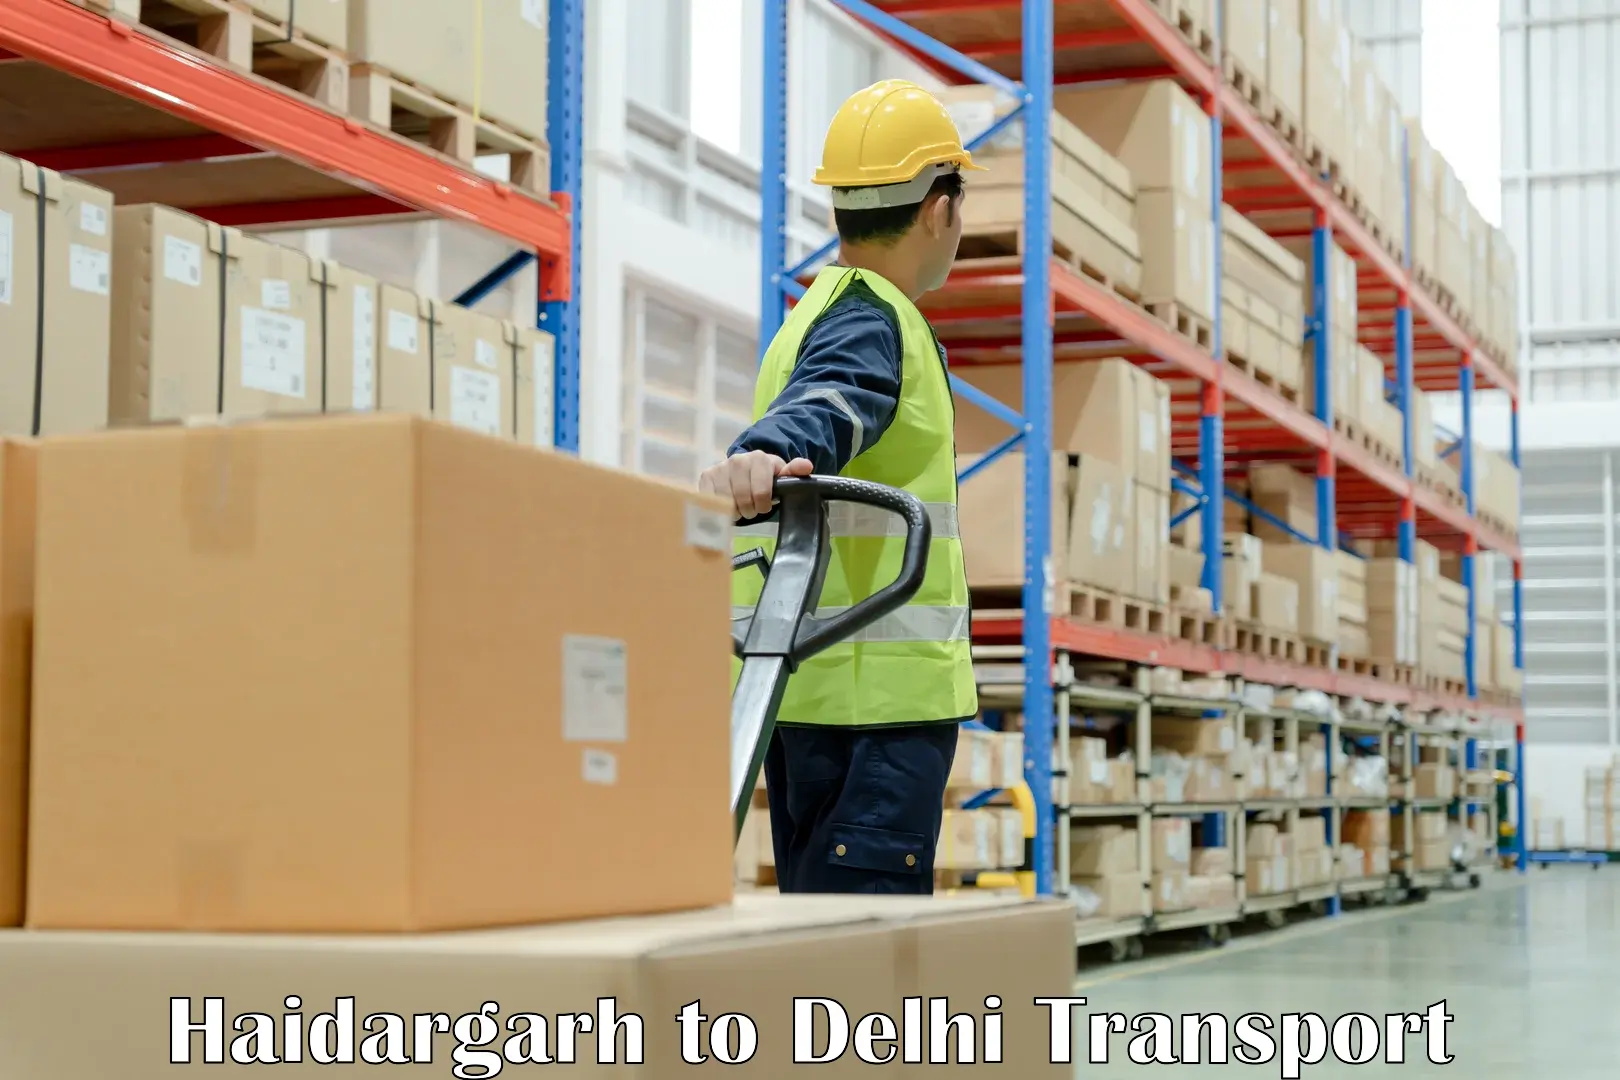 Shipping services Haidargarh to East Delhi